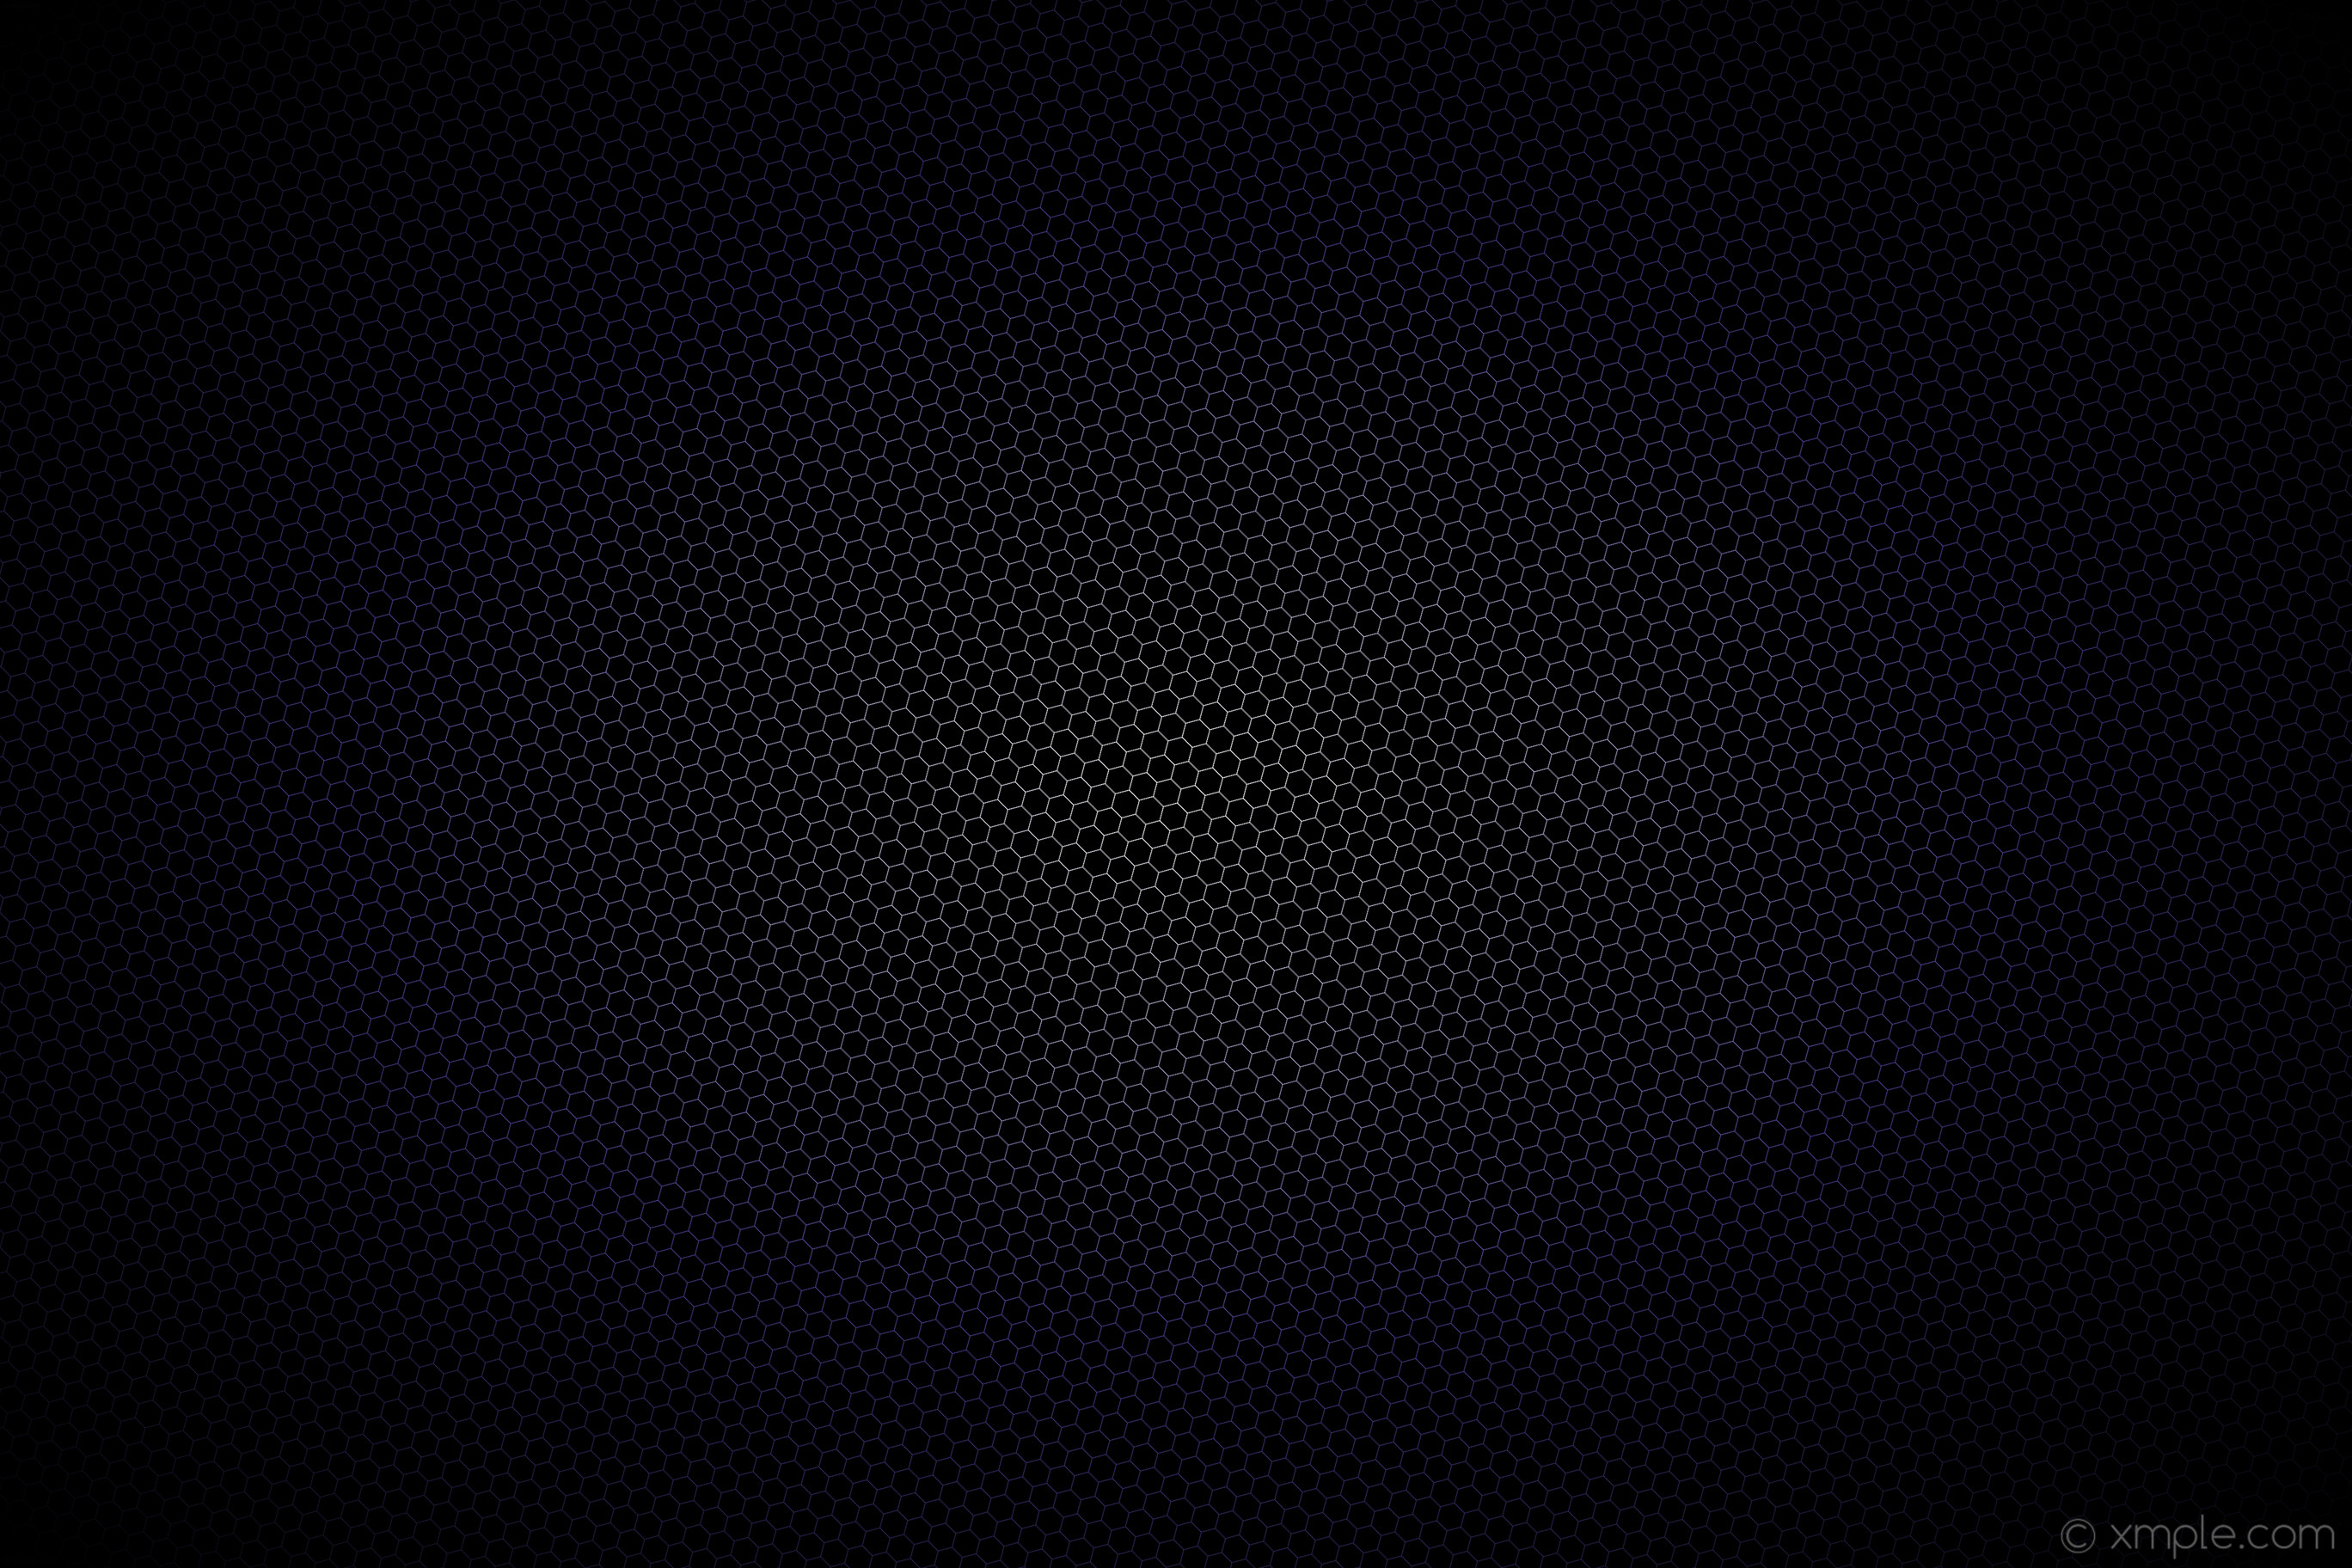 2736x1824 wallpaper black white hexagon purple glow gradient dark slate blue #000000  #ffffff #483d8b